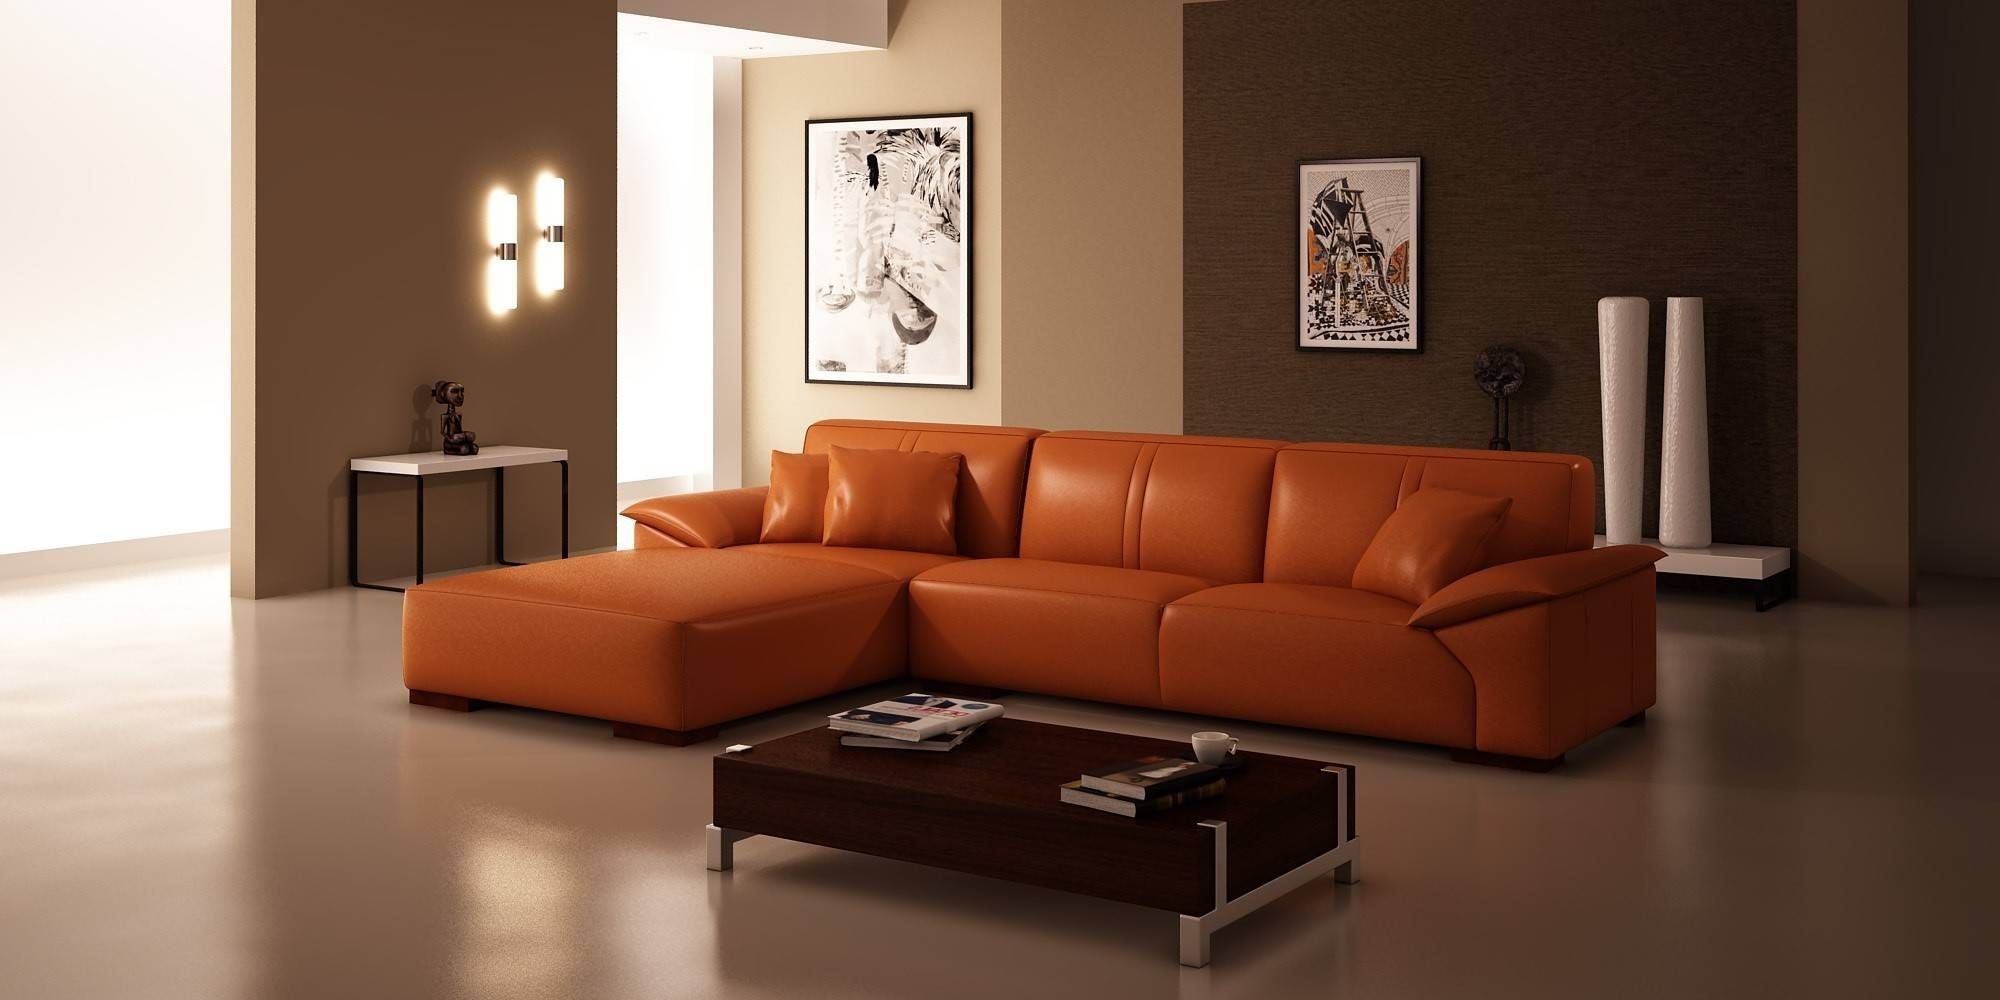 Burnt Orange And Brown Living Room Furniture